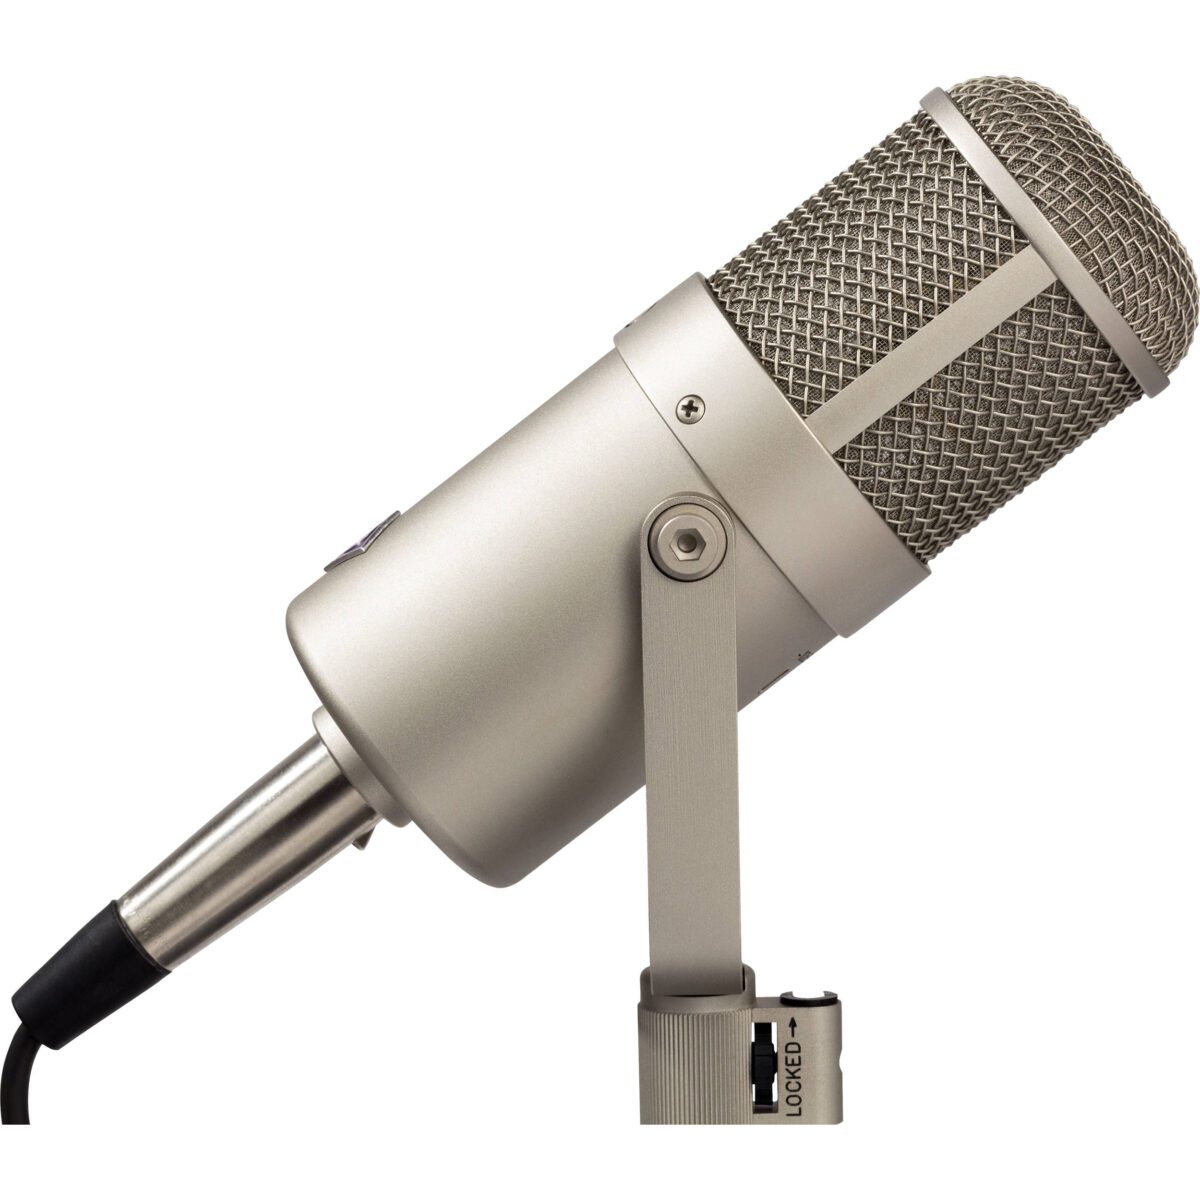 Neumann U 47 FET Collector's Edition Large-diaphragm Condenser Microphone